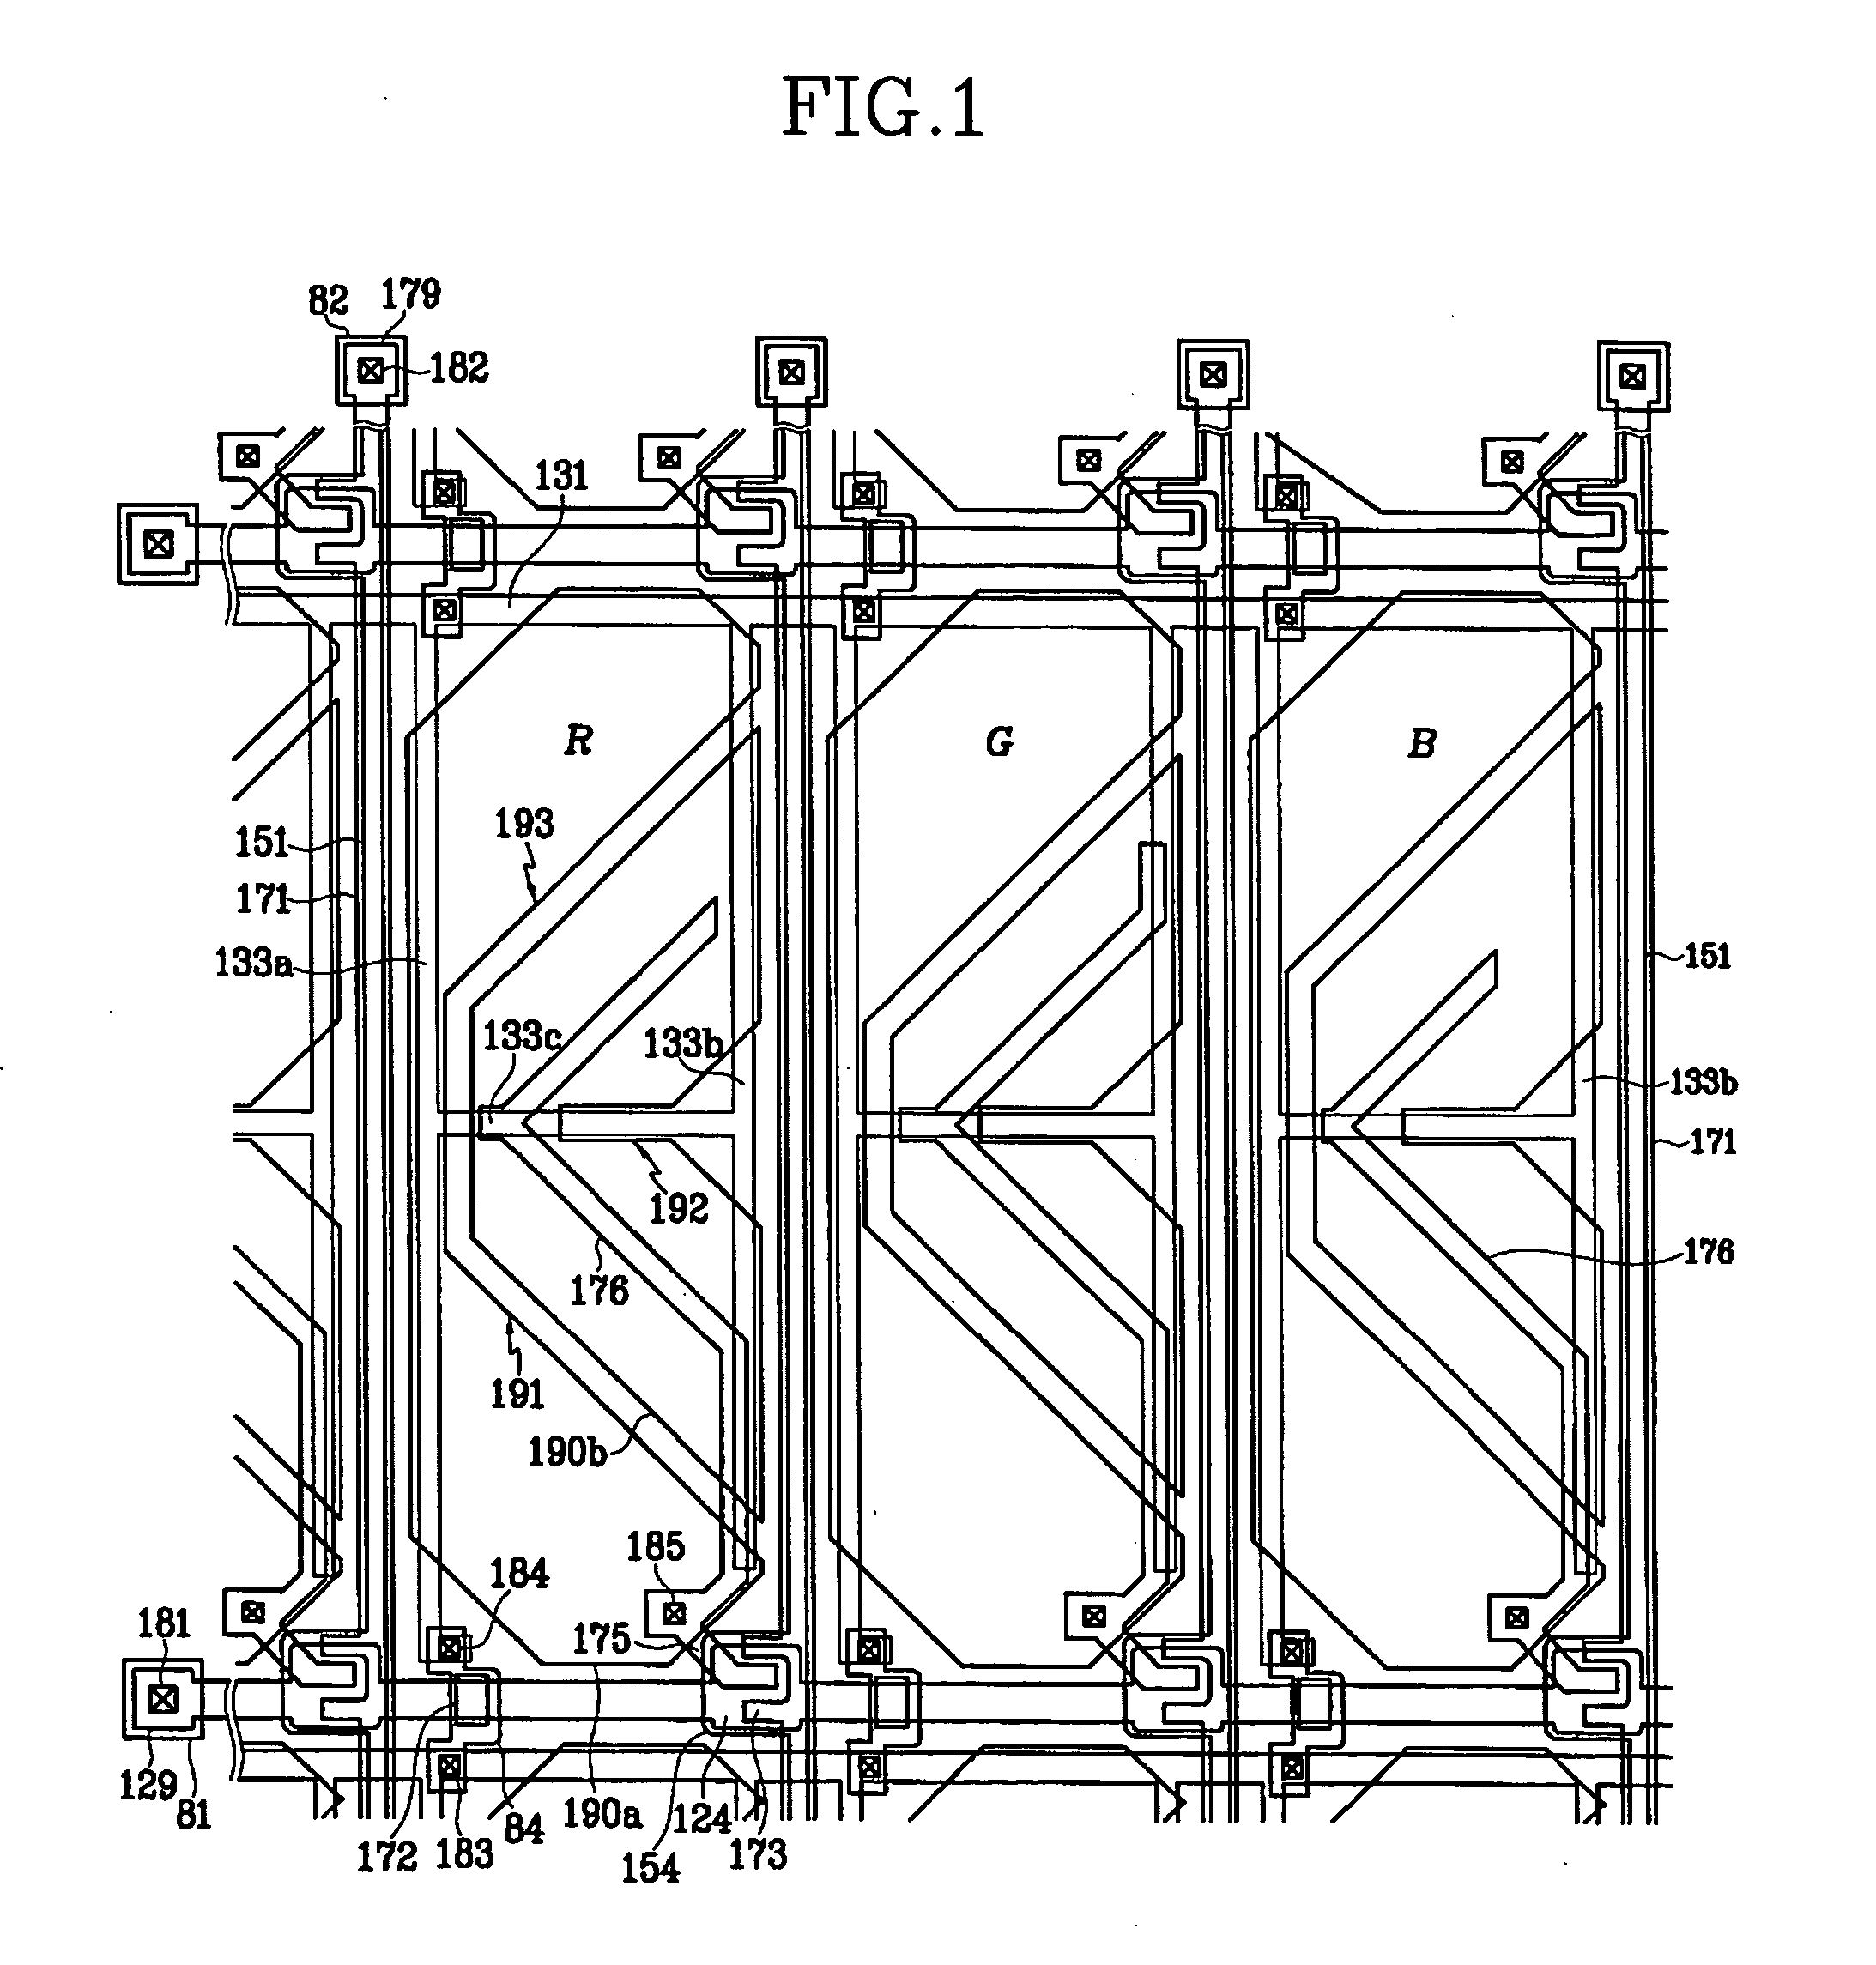 Thin film transistor array panel and liquid crystal display